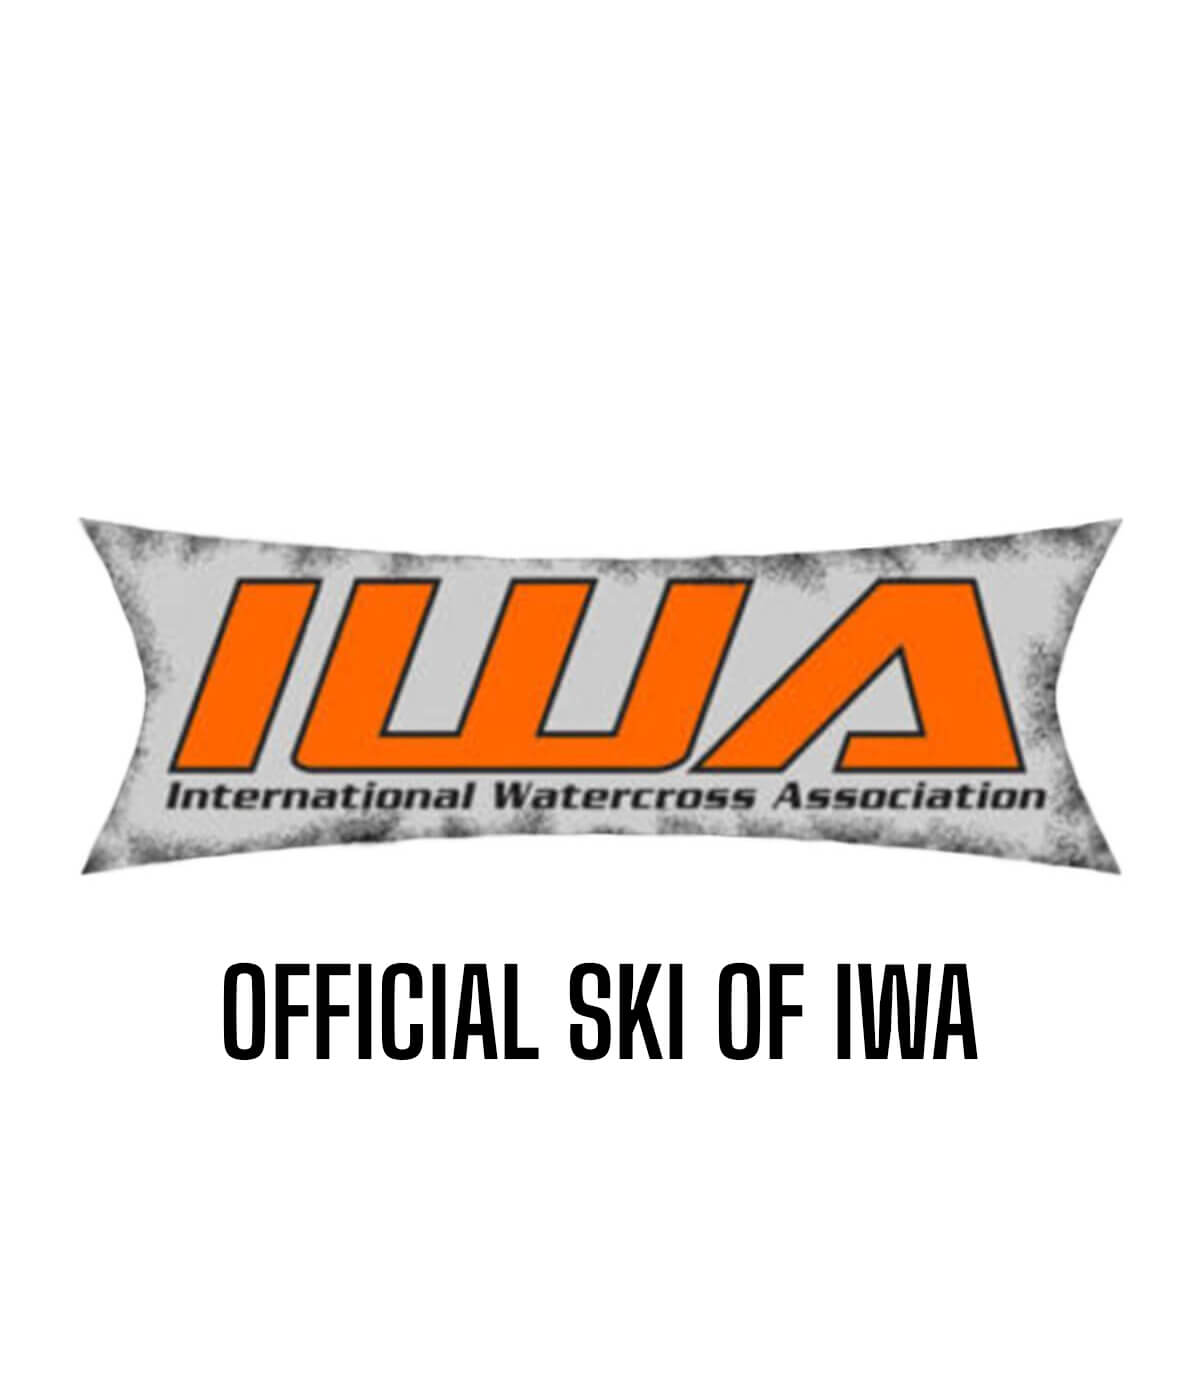 International Watercross Association logo with text "Official Ski of IWA"